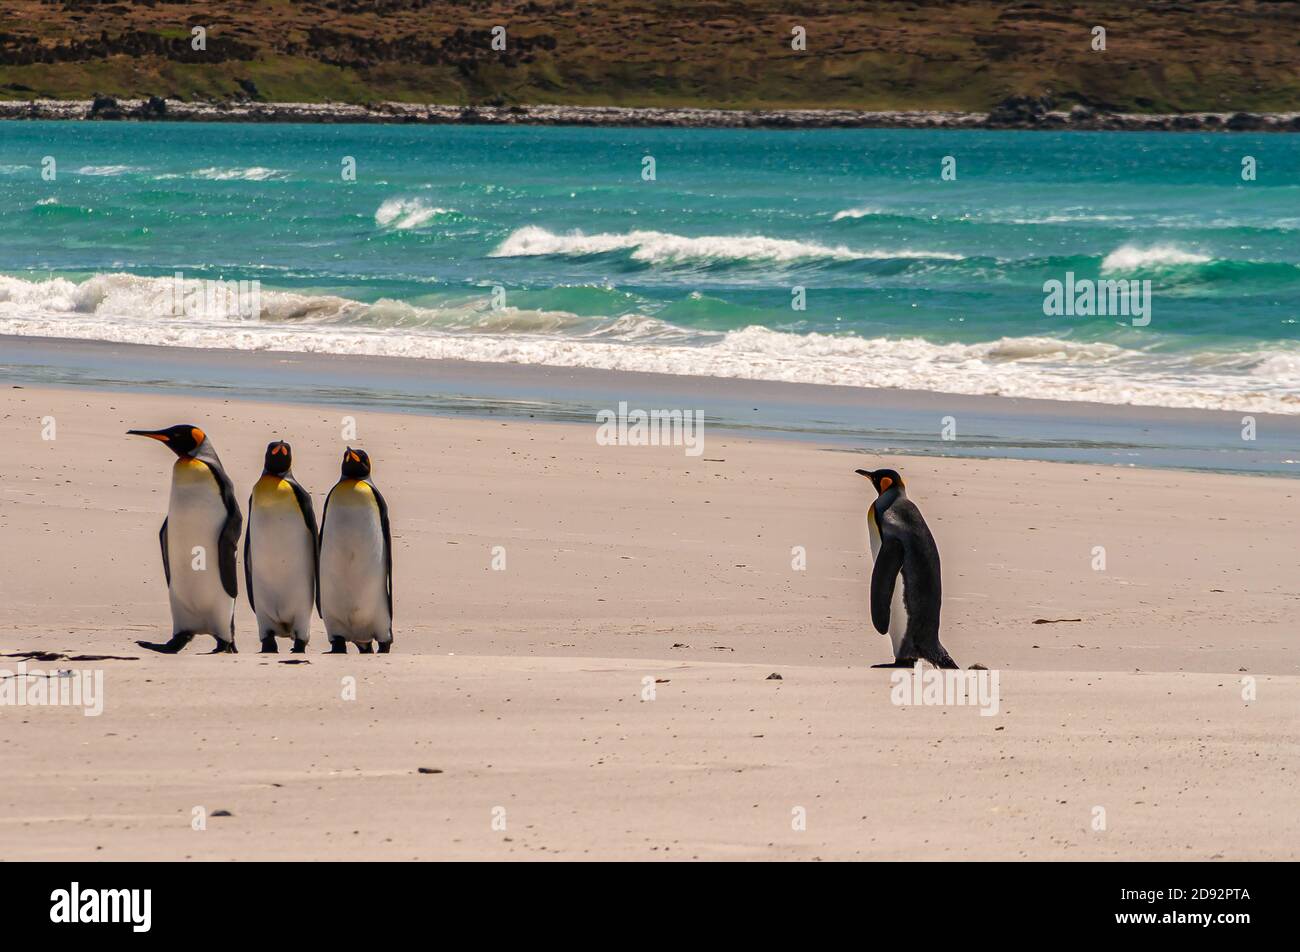 Volunteer Beach, Falkland Islands, UK - December 15, 2008: 4 King Penguins return from azure ocean on white-beige sand with landmass in back. Stock Photo